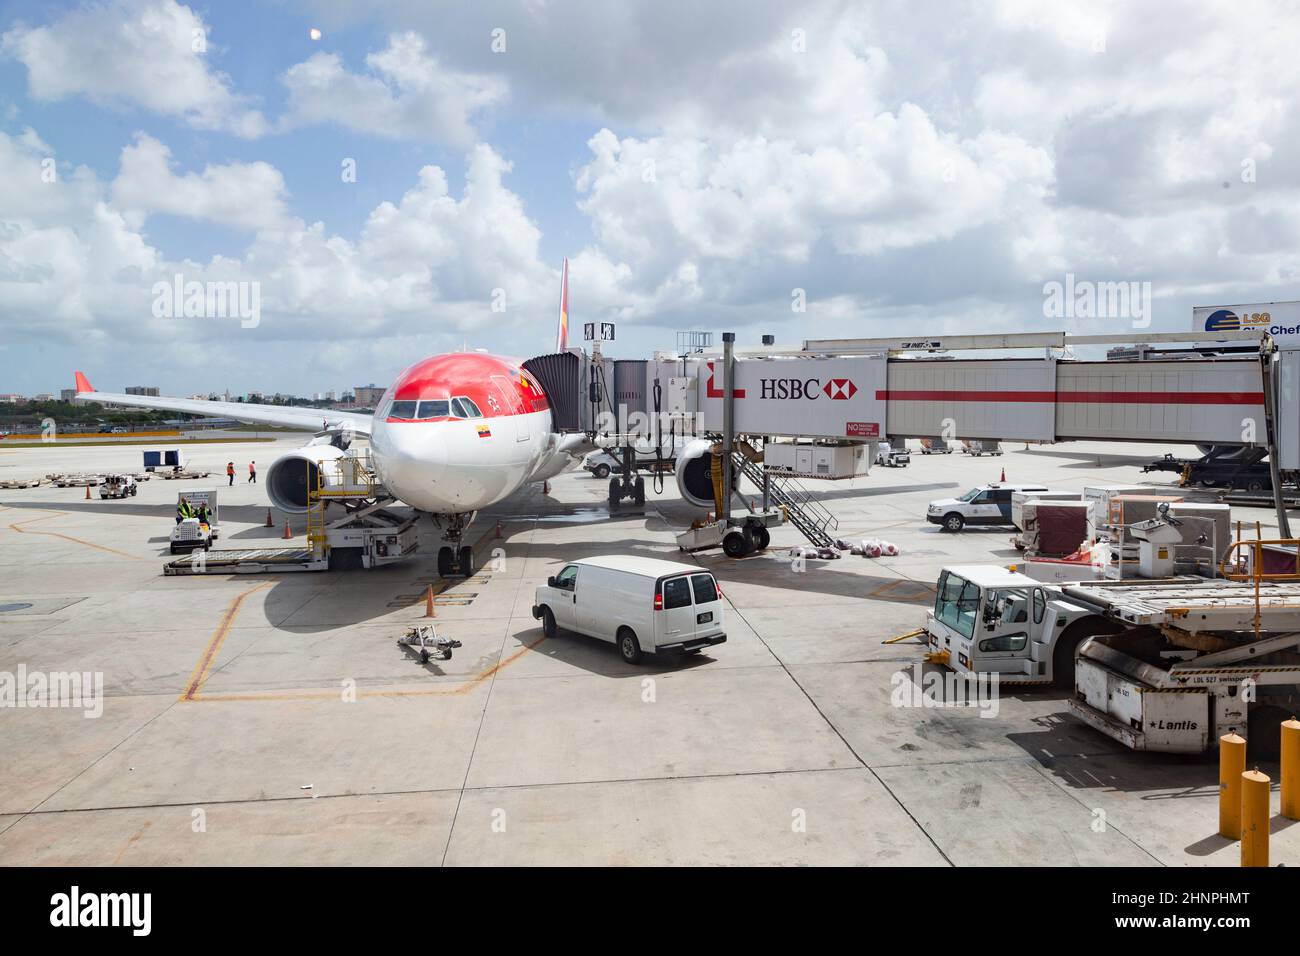 bolivian aircraft ready for boarding at Miami international airport Stock Photo